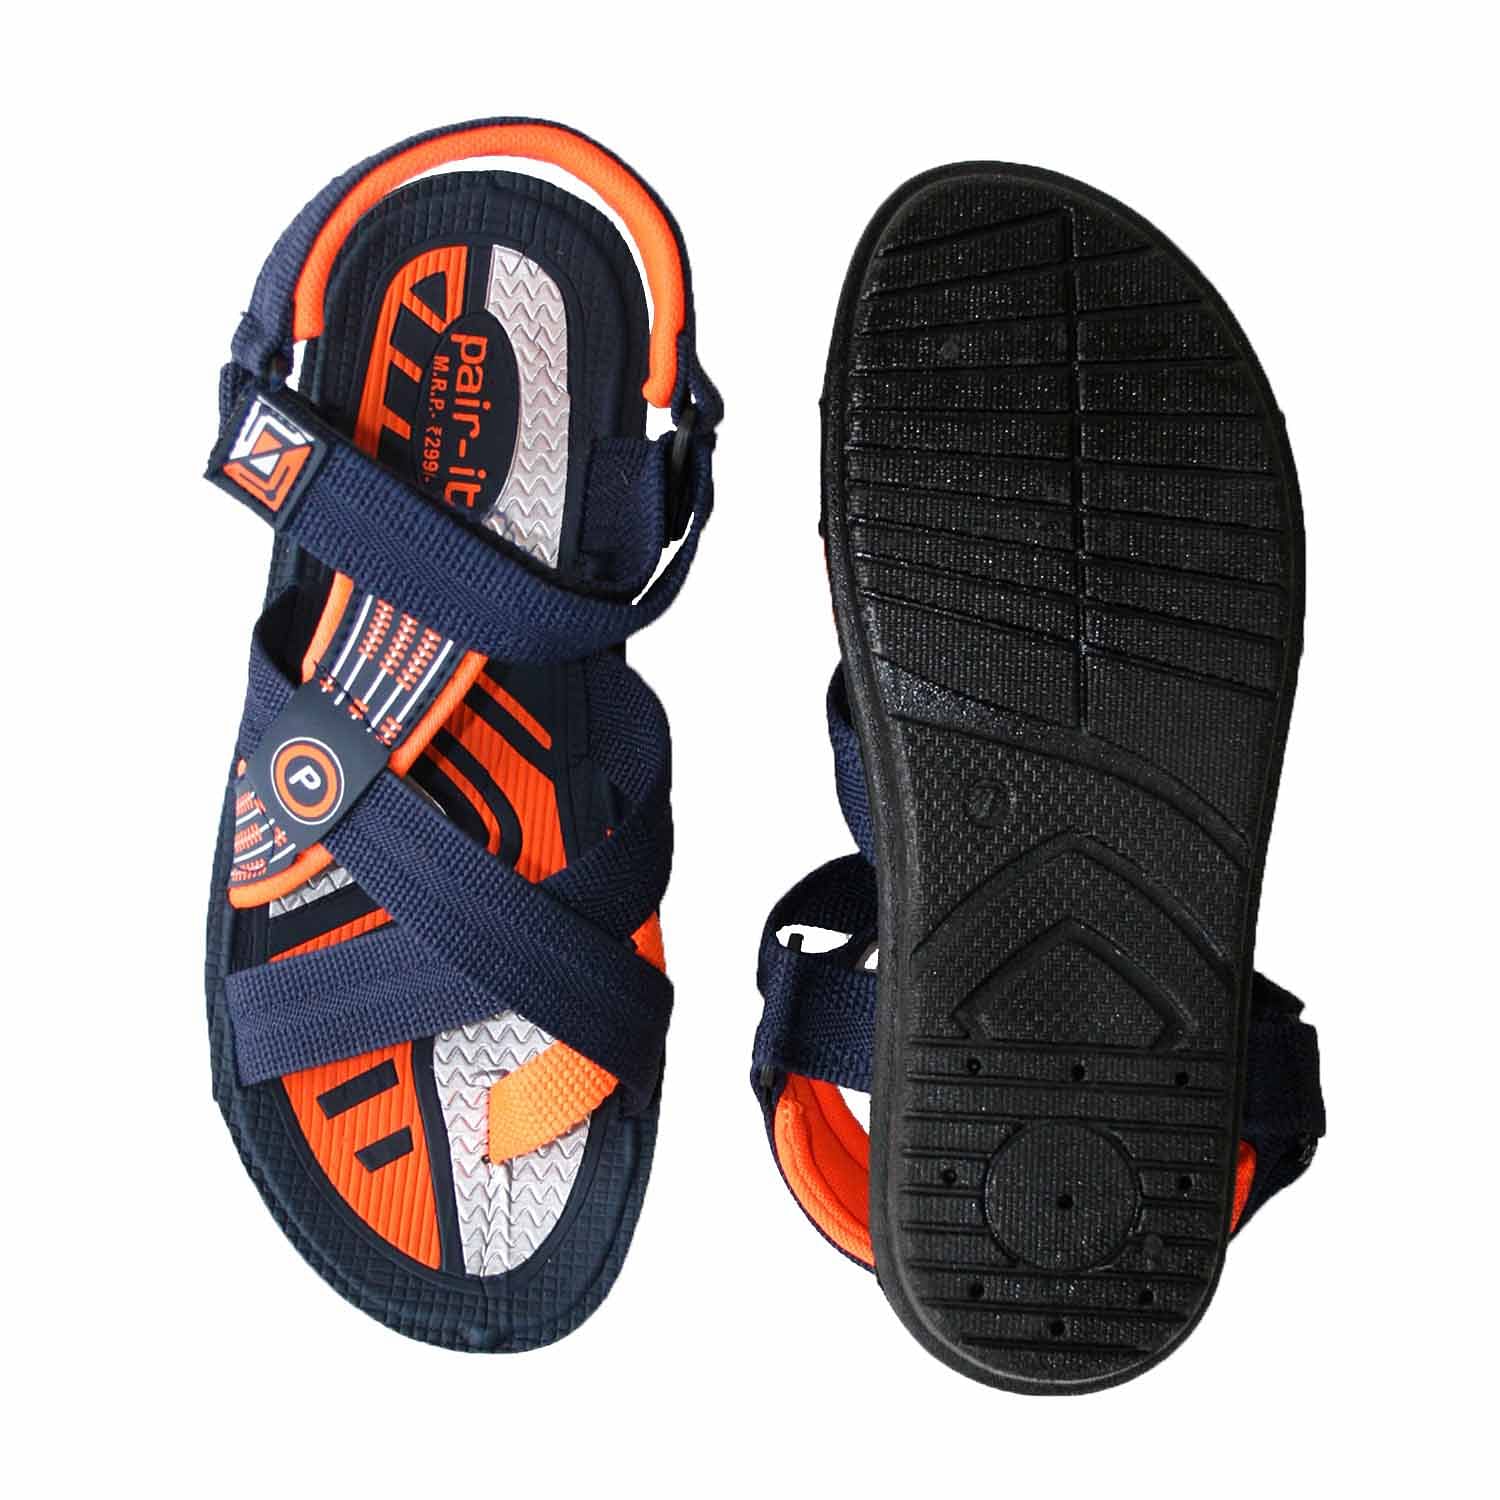 Pair-it Mn Sandals-RE-Gladio112-N. Blue/Orange